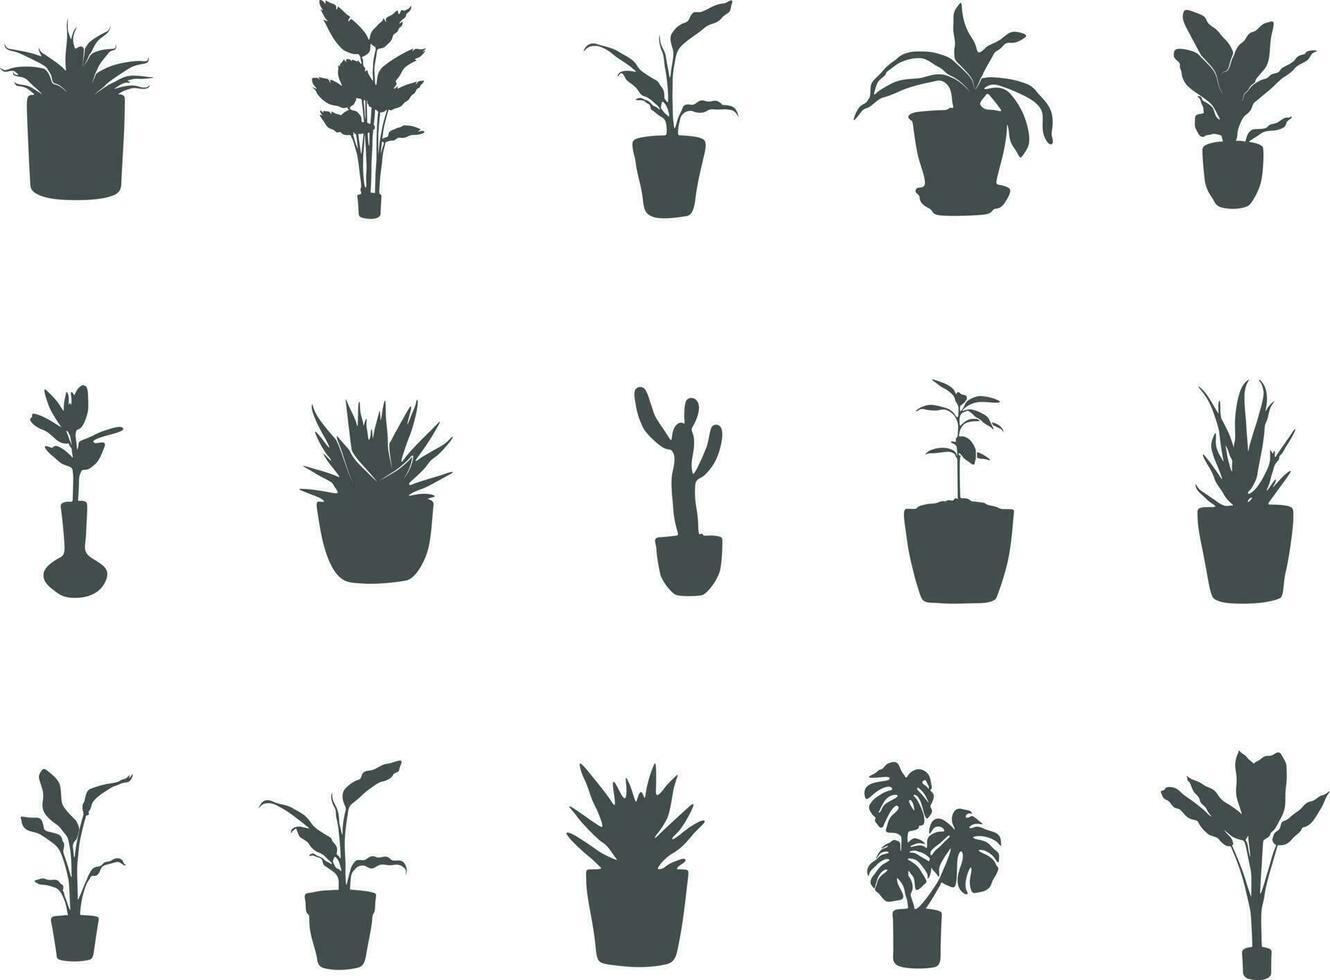 eingetopft Pflanze Silhouetten, eingetopft planen Vektor Illustration.